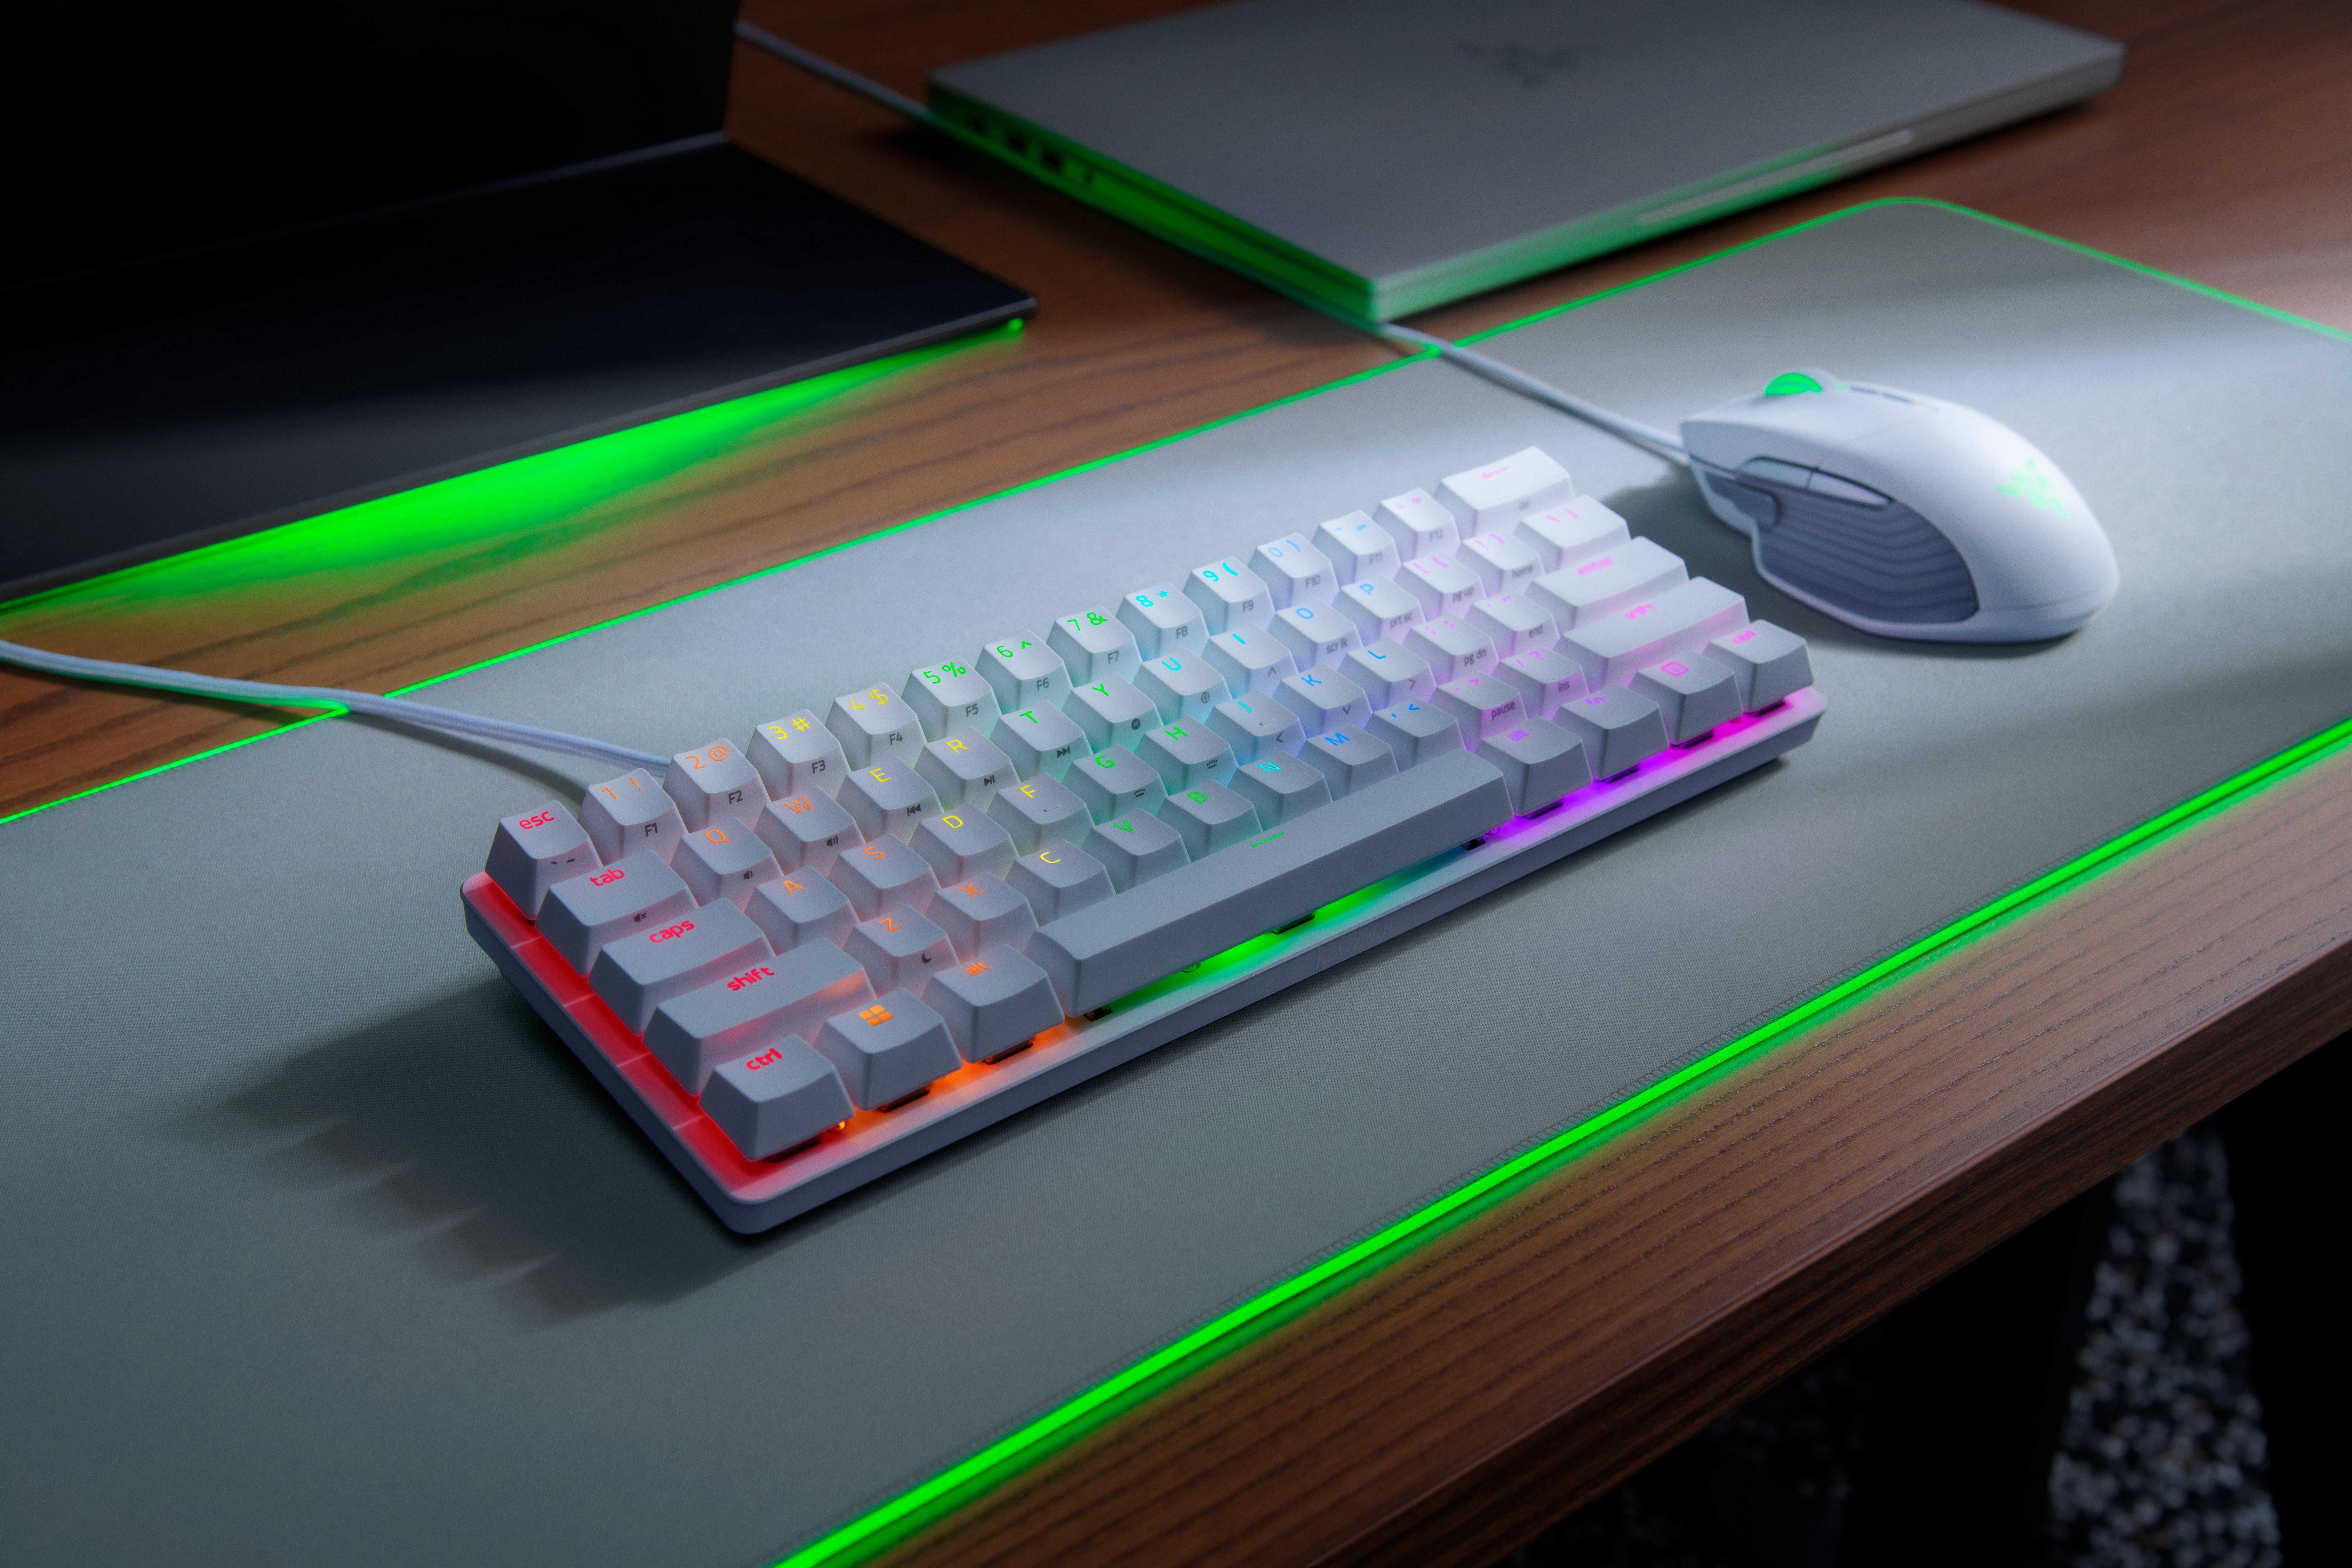 Razer Huntsman V2 - Optical Gaming Keyboard (Linear Red Switch) - US Layout  : Electronics 